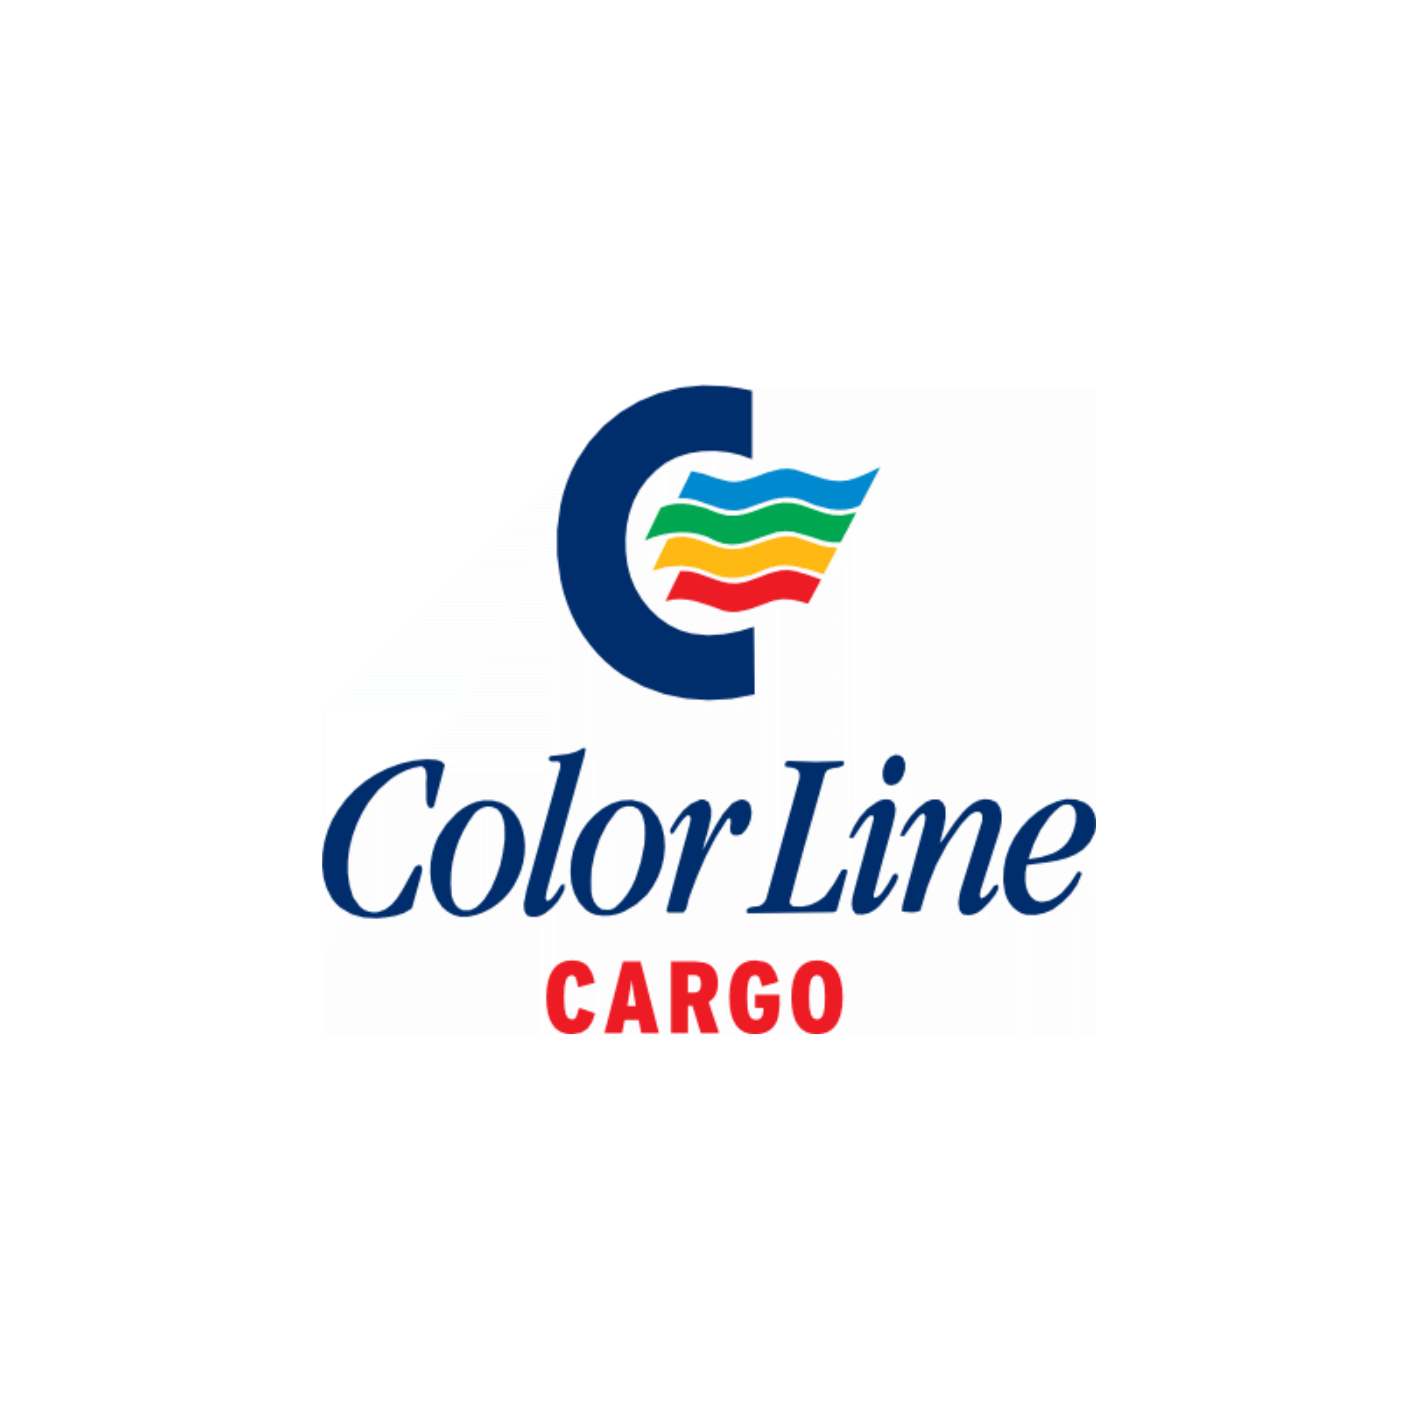 colore-linea-cargo-logo